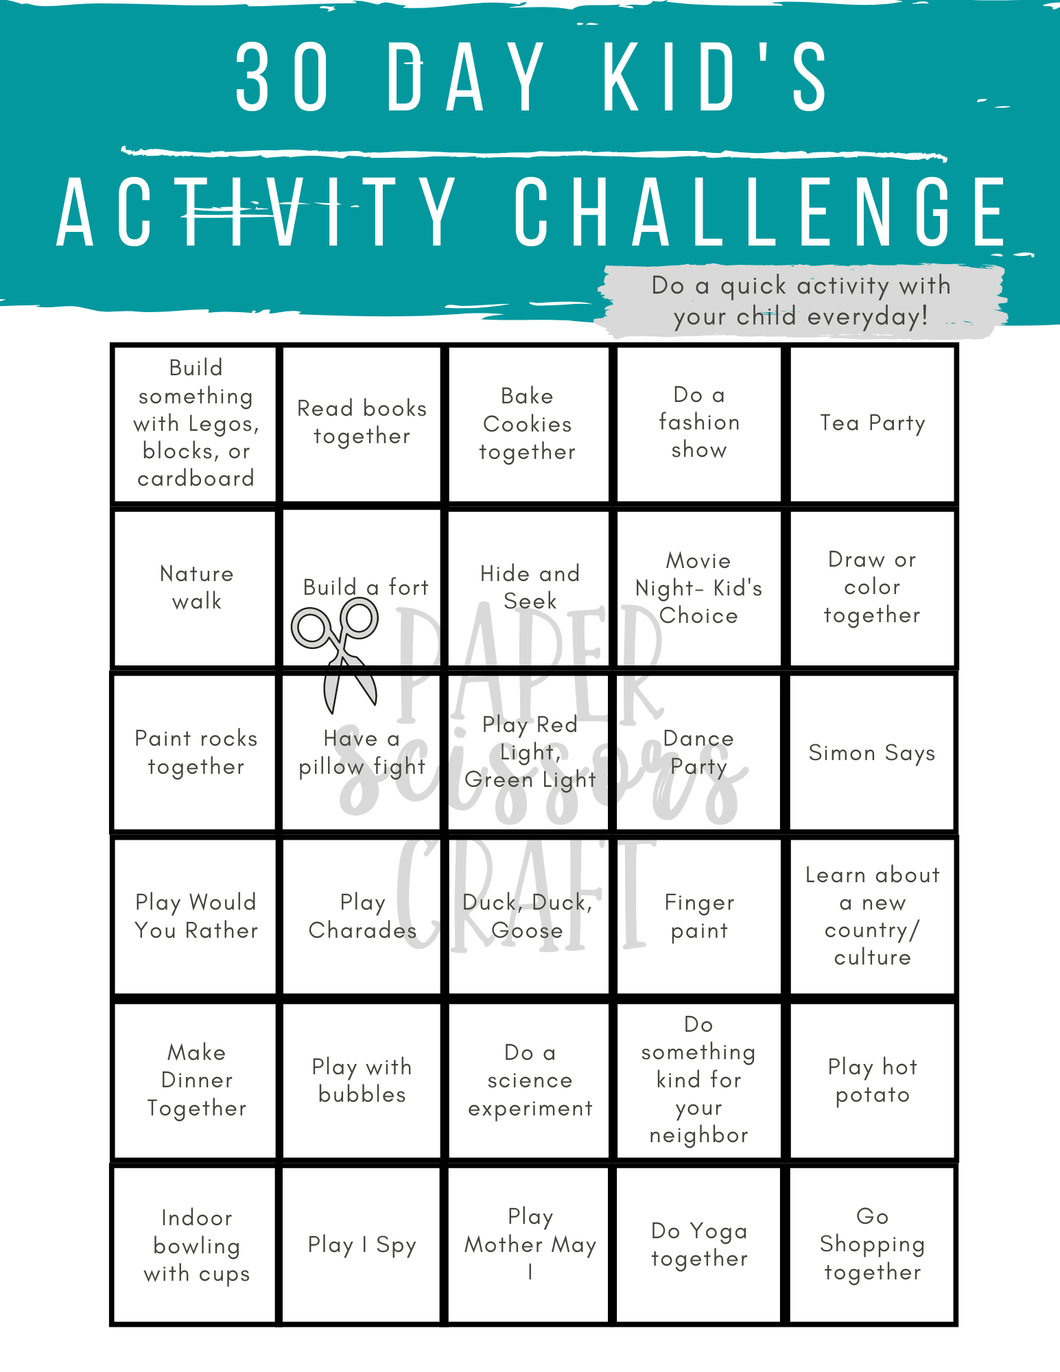 30 Day Kid's Activity Challenge